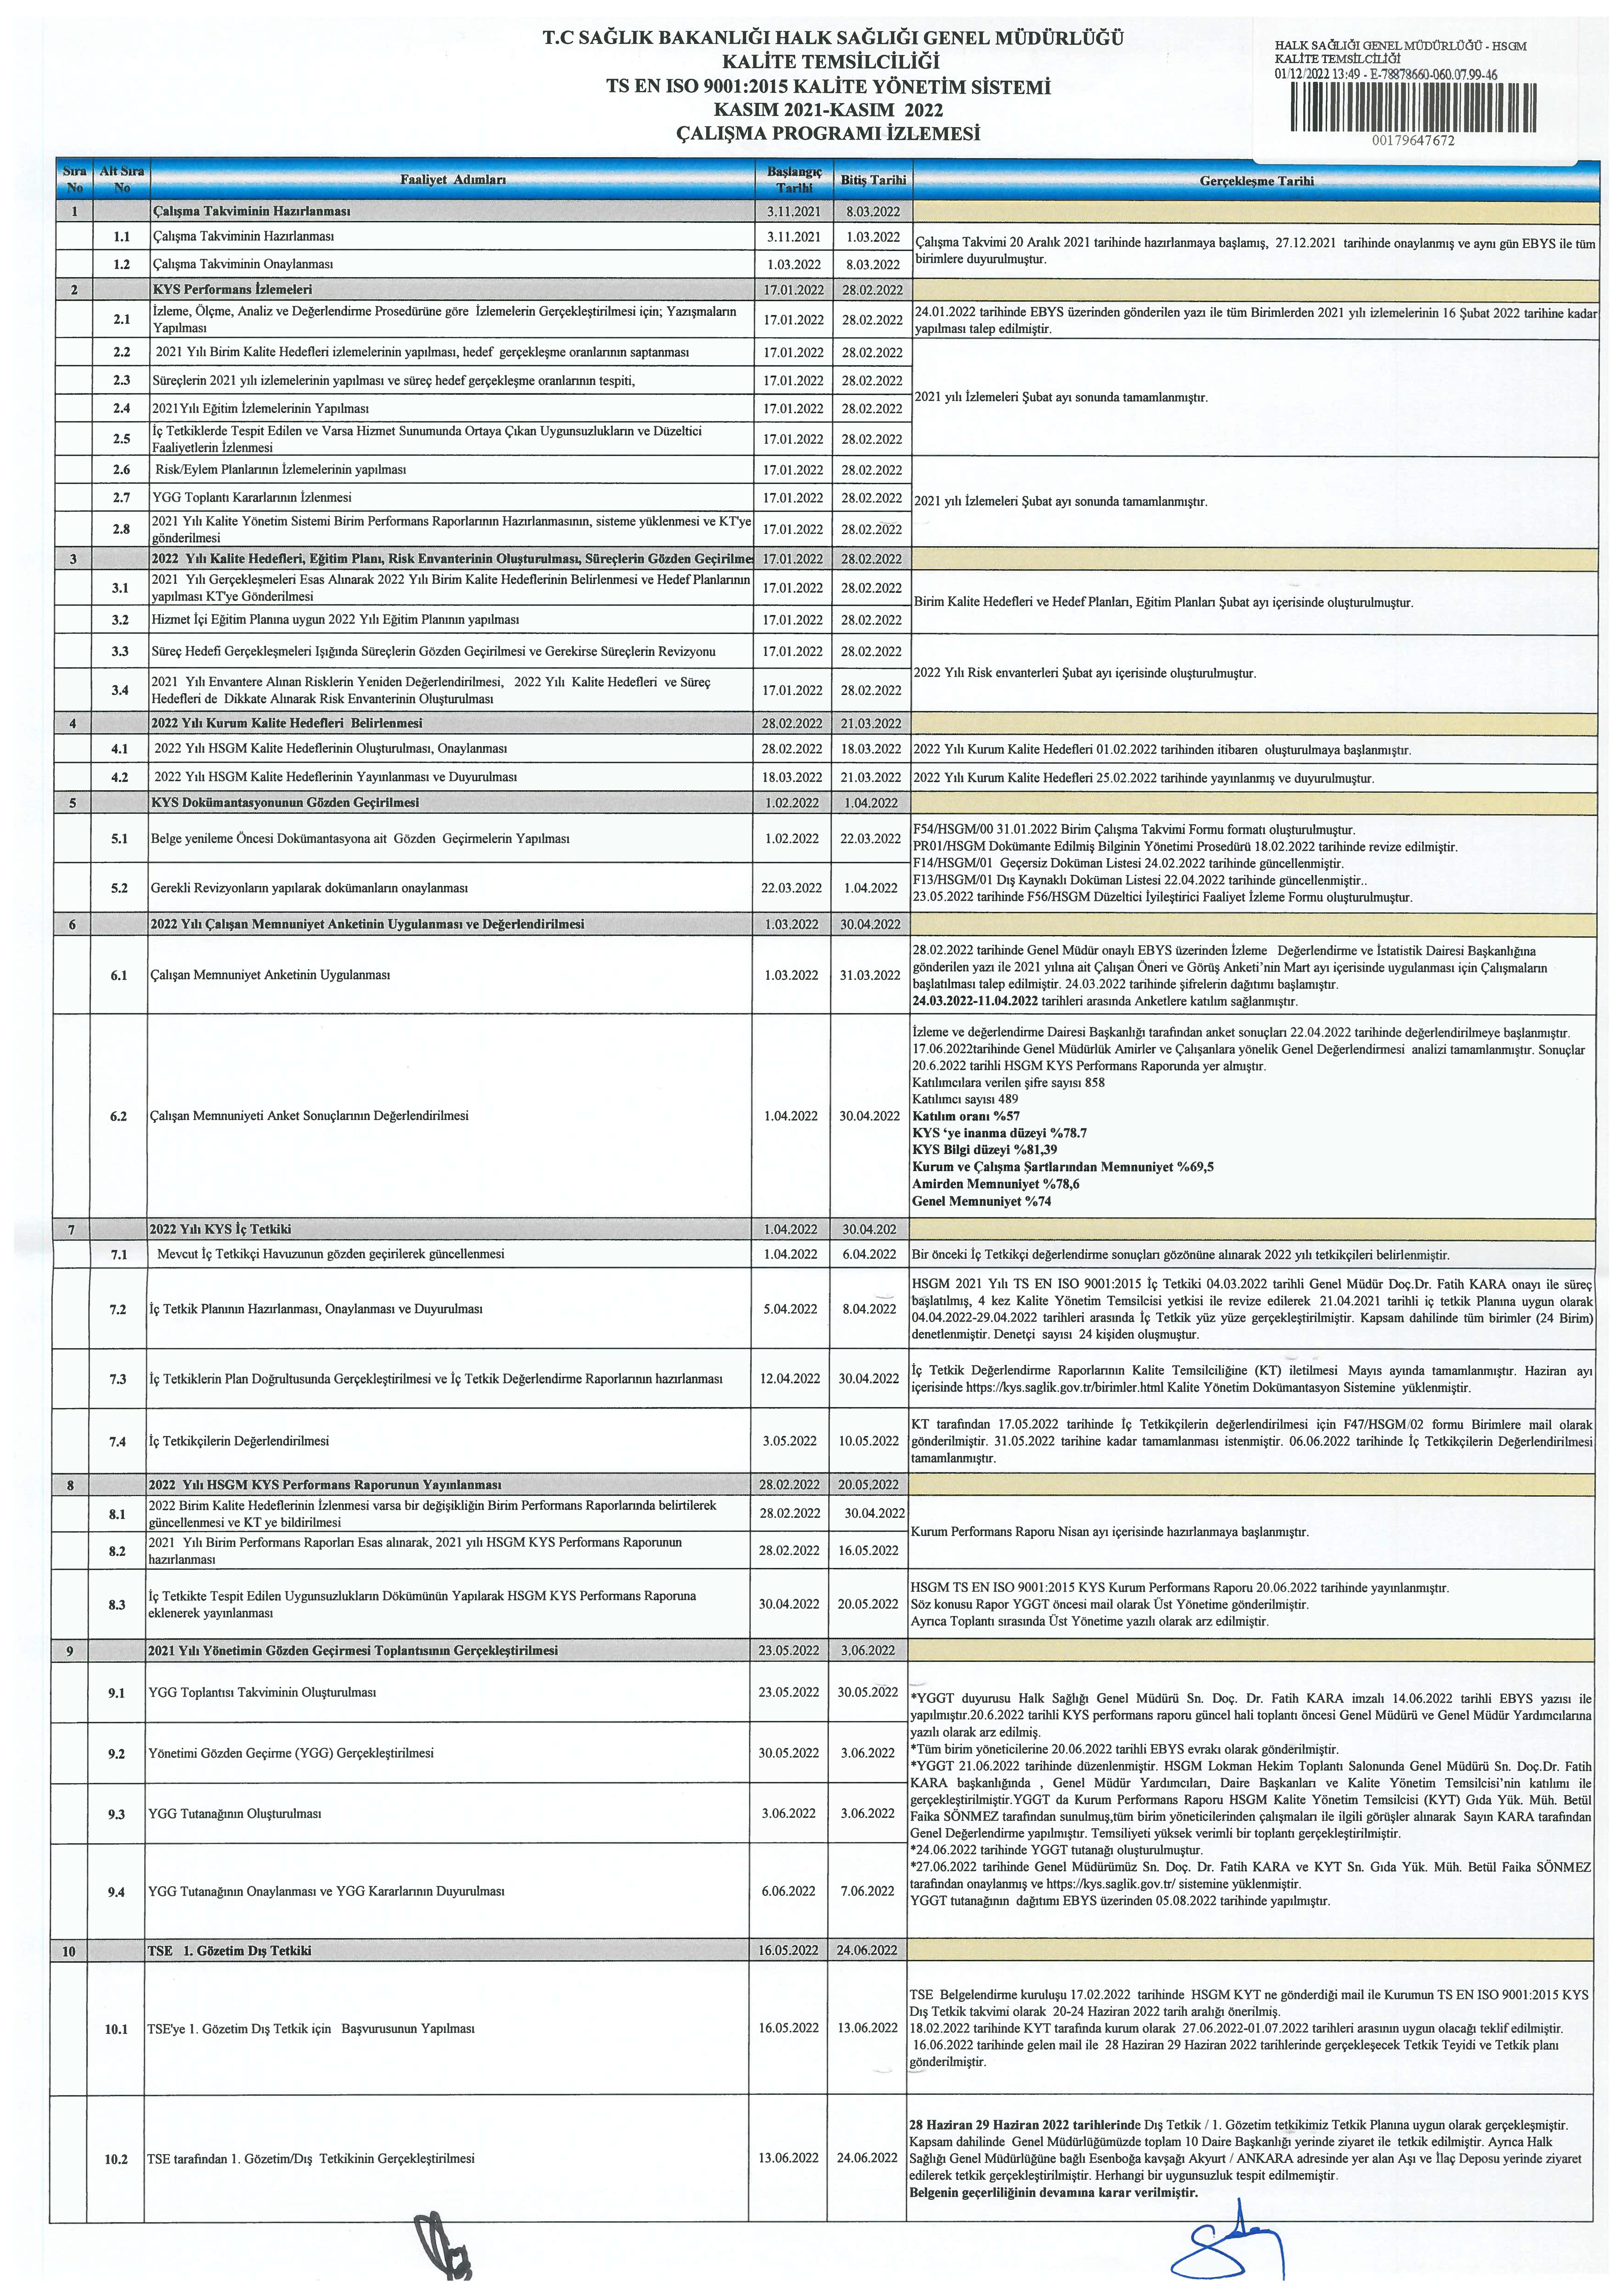 KASIM 2021 KASIM 2022 HSGM TS EN ISO 90012015 KYS Calisma Programi Izlemesi Page 1